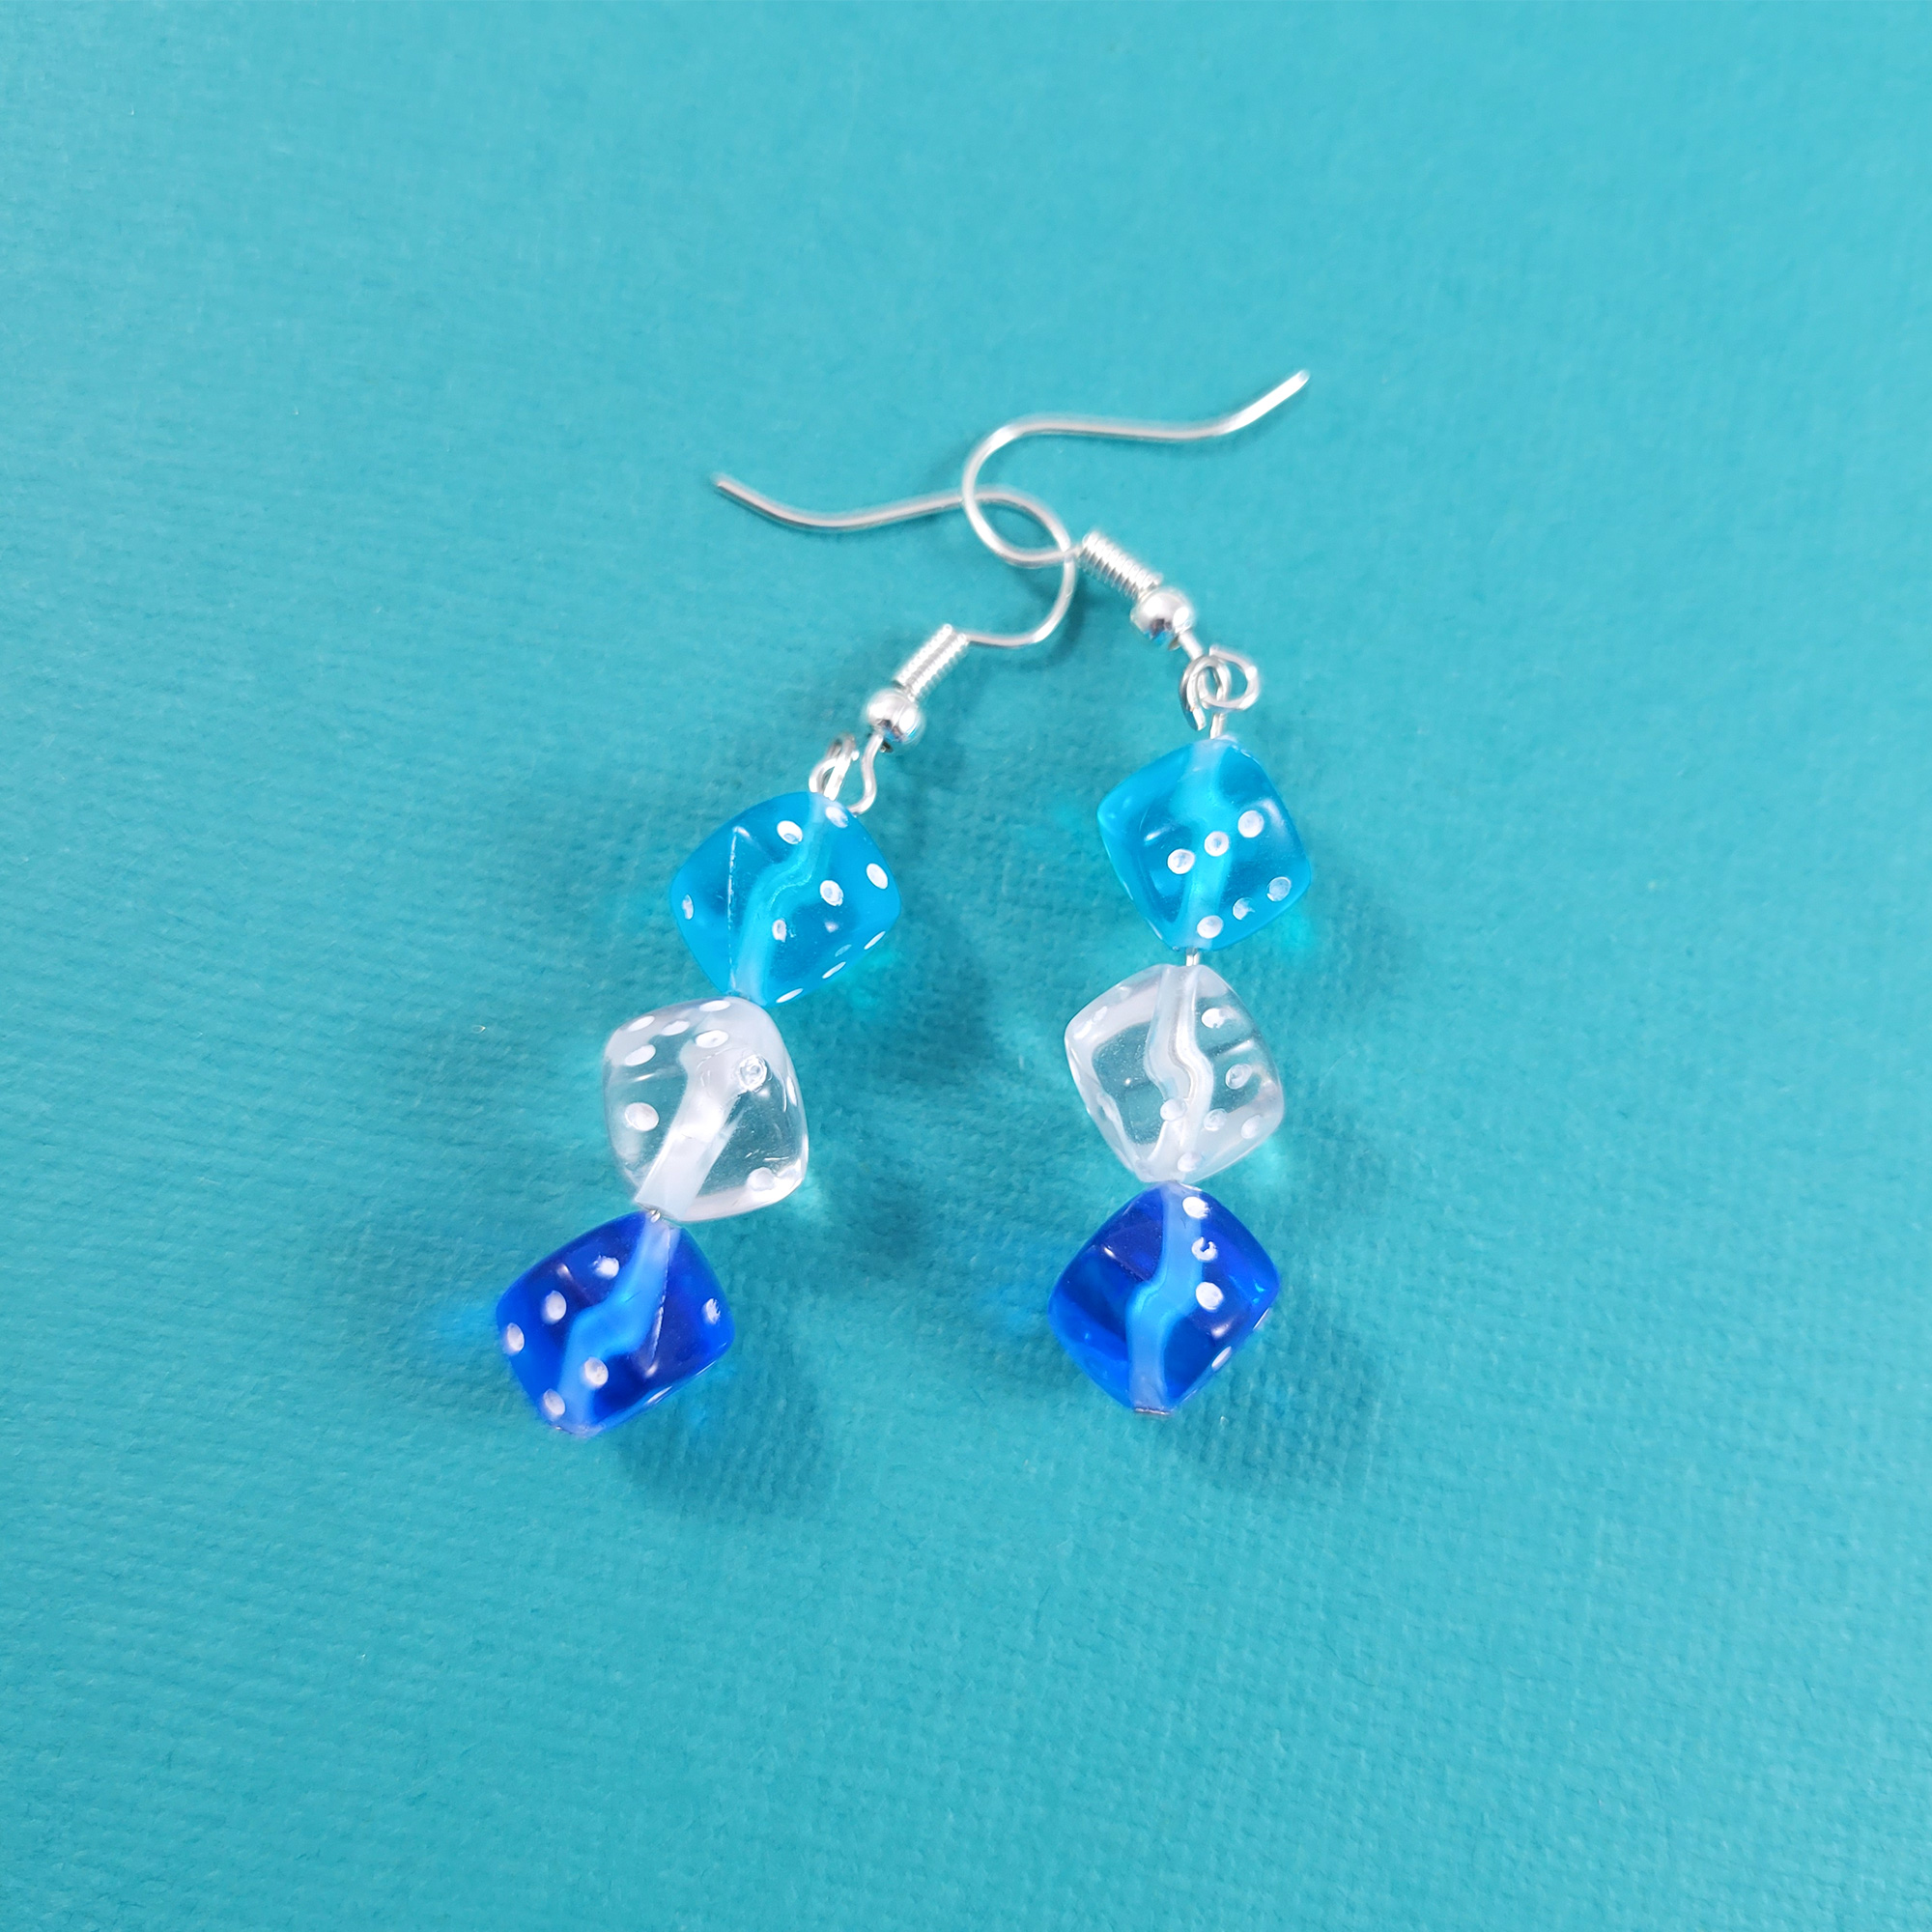 Icy Blue Gamer Gear Earrings by Wilde Designs